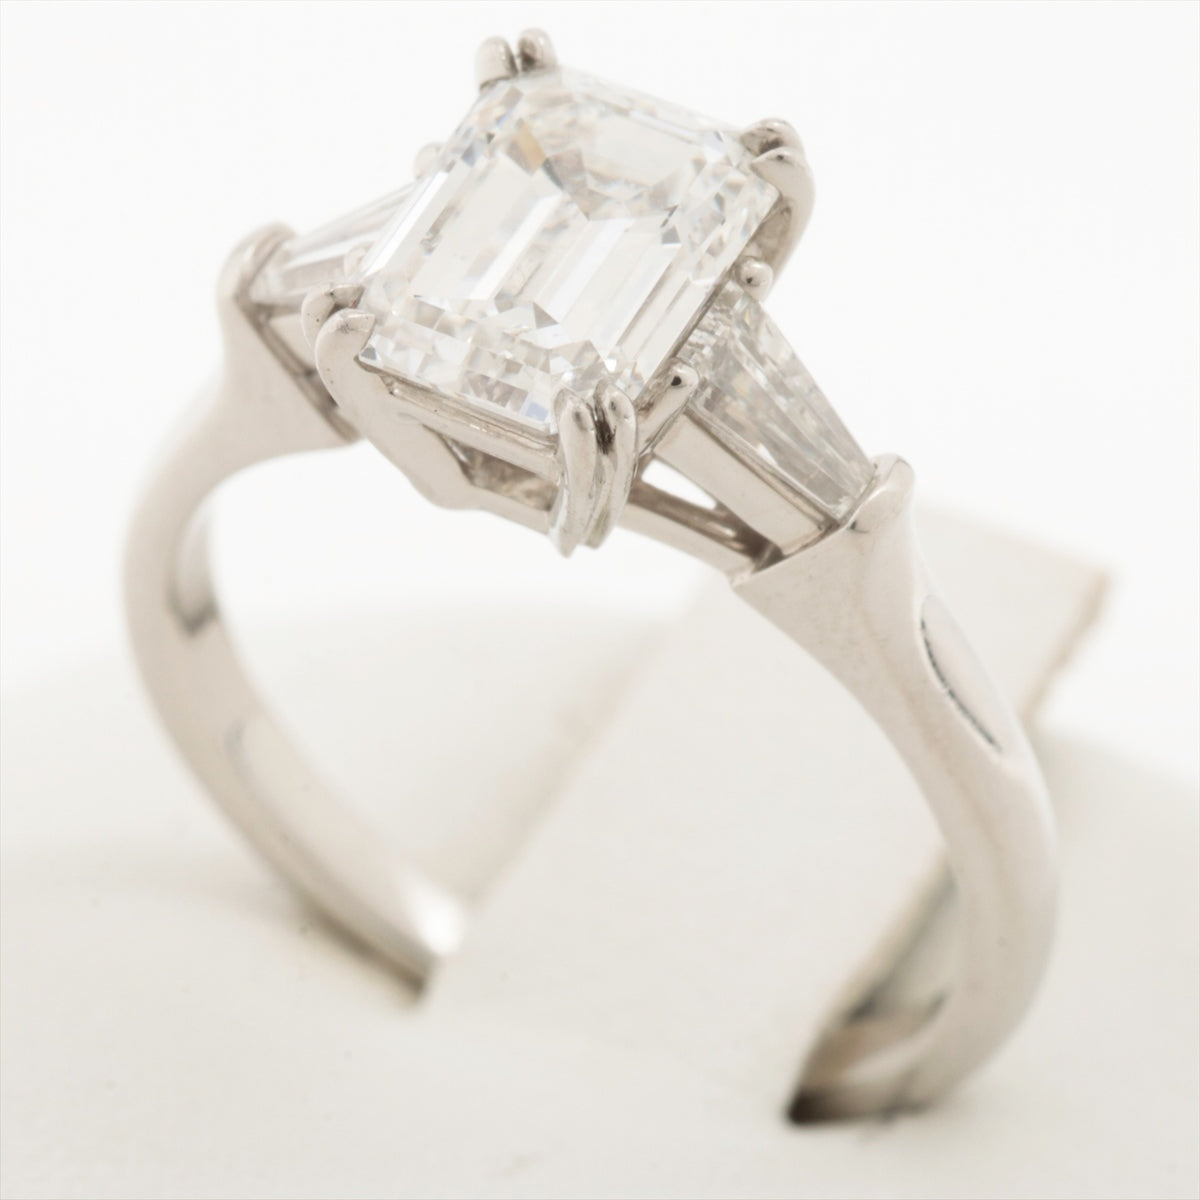 Harry Winston Classic diamond rings Pt950 4.7g 1.52 D VVS2 Emerald NONE